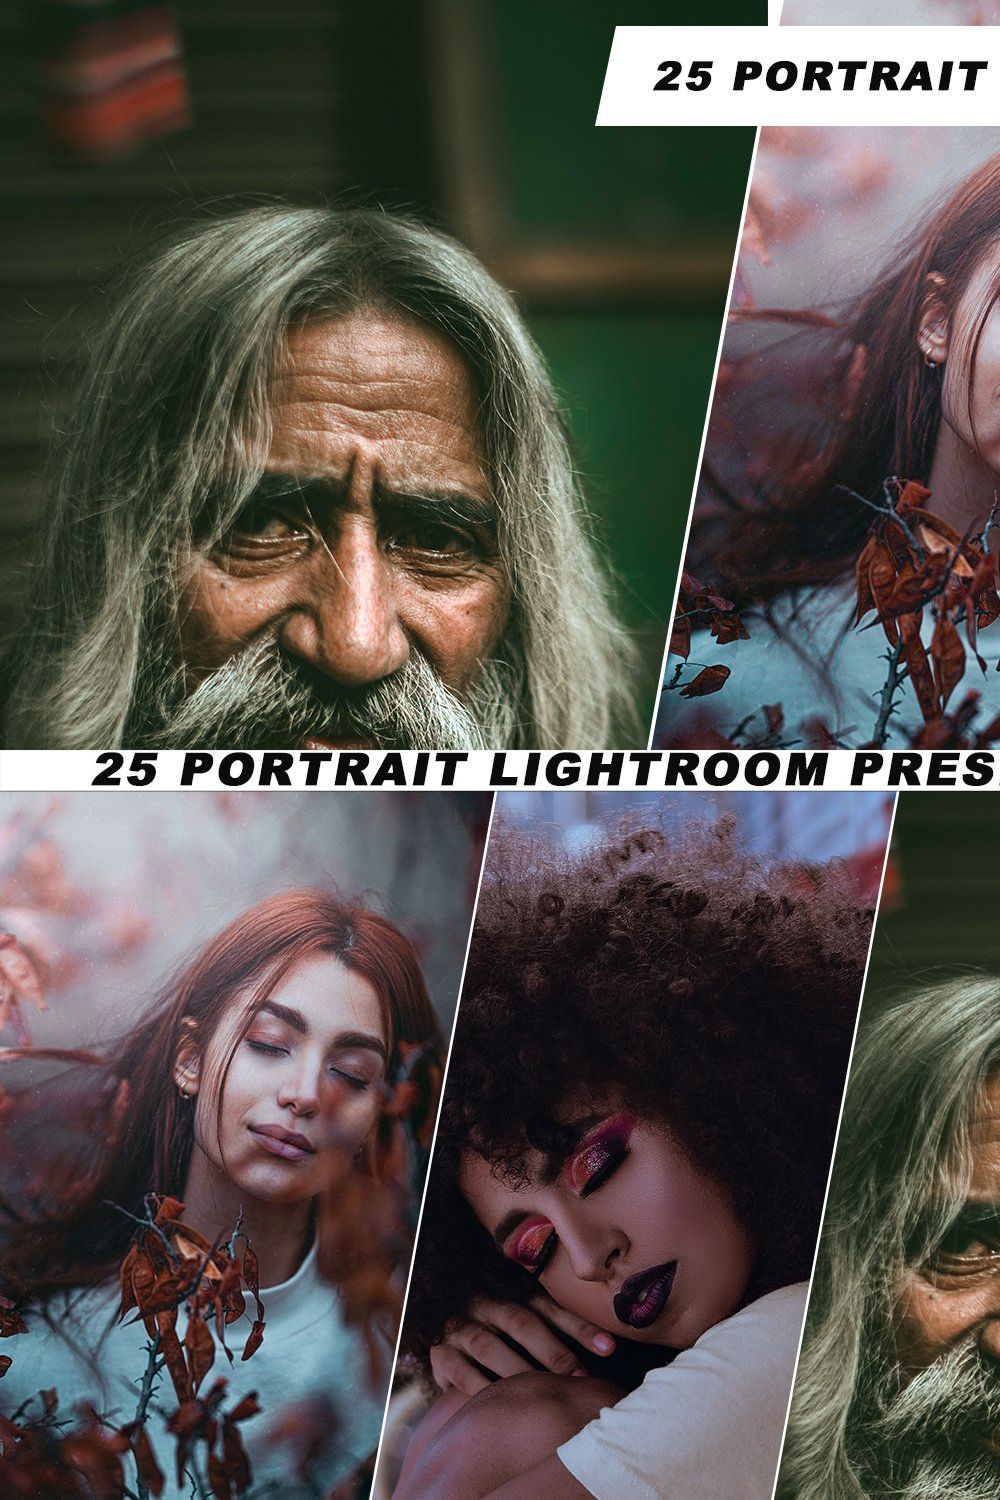 25 Portrait Lightroom Presets pinterest preview image.